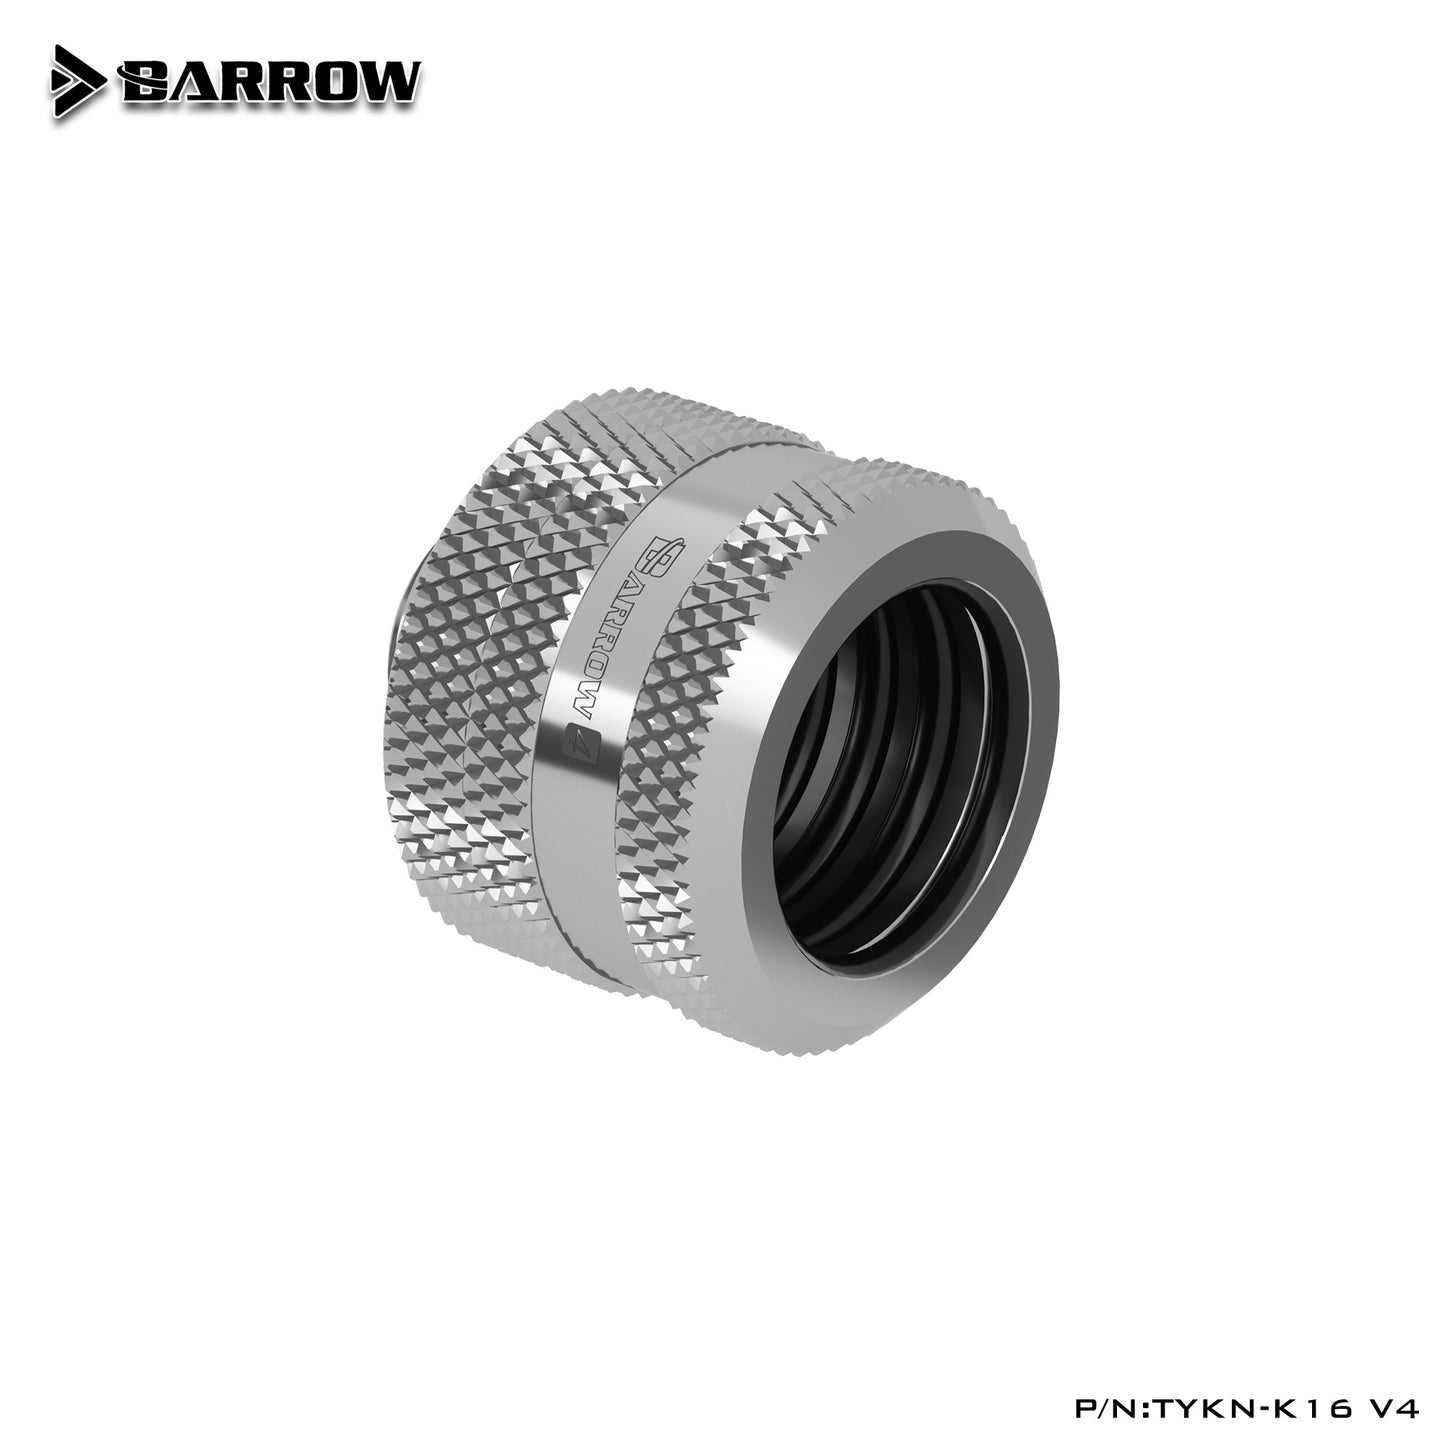 Barrow TYKN-K16 V4, OD16mm Hard Tube Fittings, G1/4 Adapters For OD16mm Hard Tubes